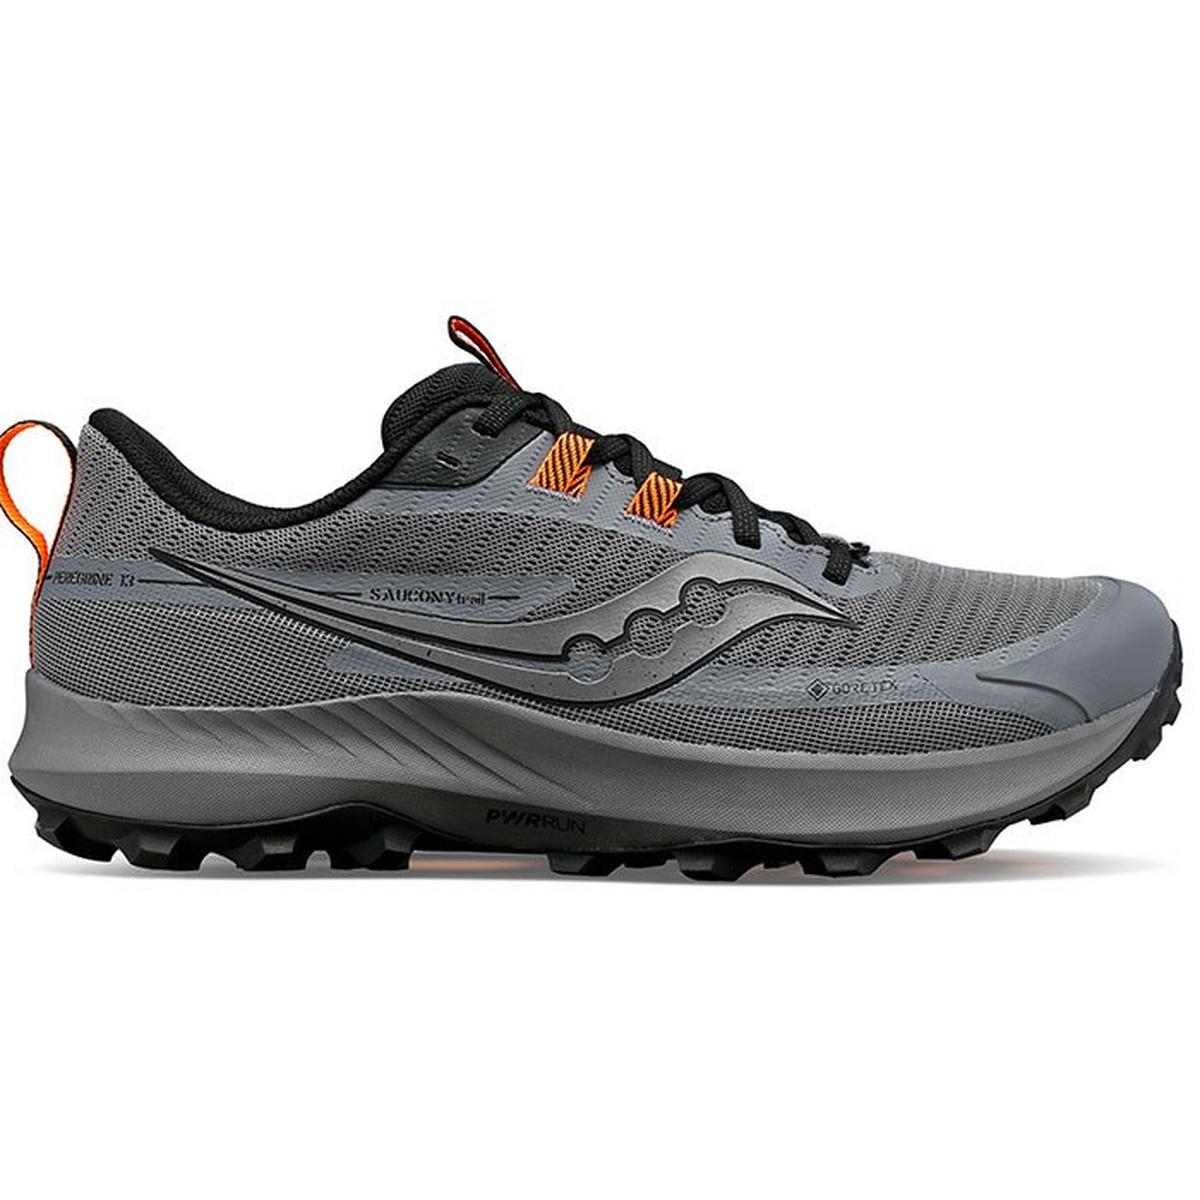 Men's Peregrine 13 GTX Trail Running Shoe